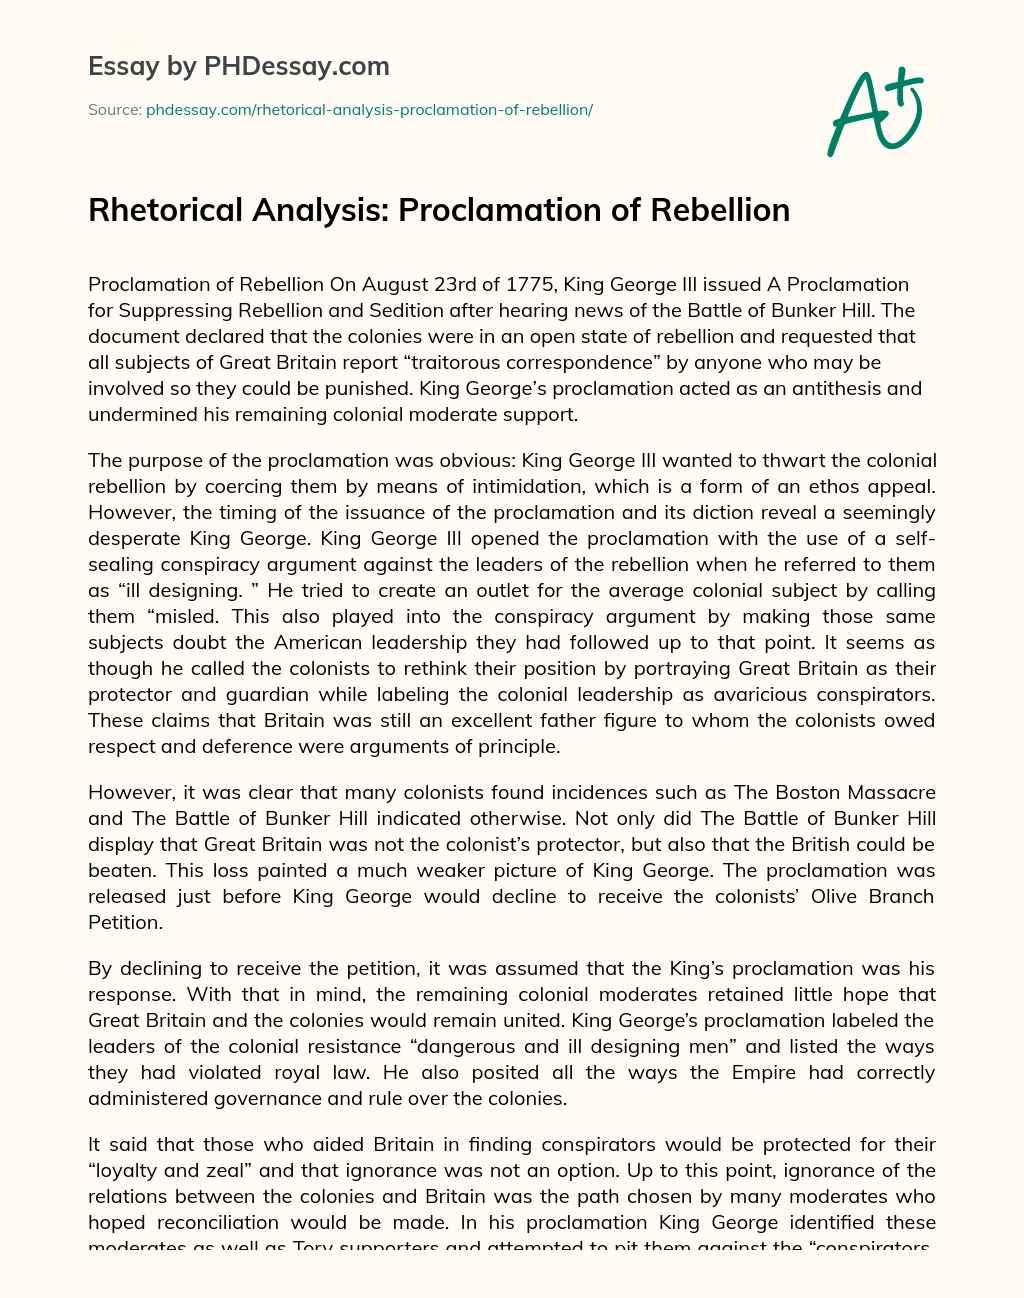 Rhetorical Analysis: Proclamation of Rebellion essay